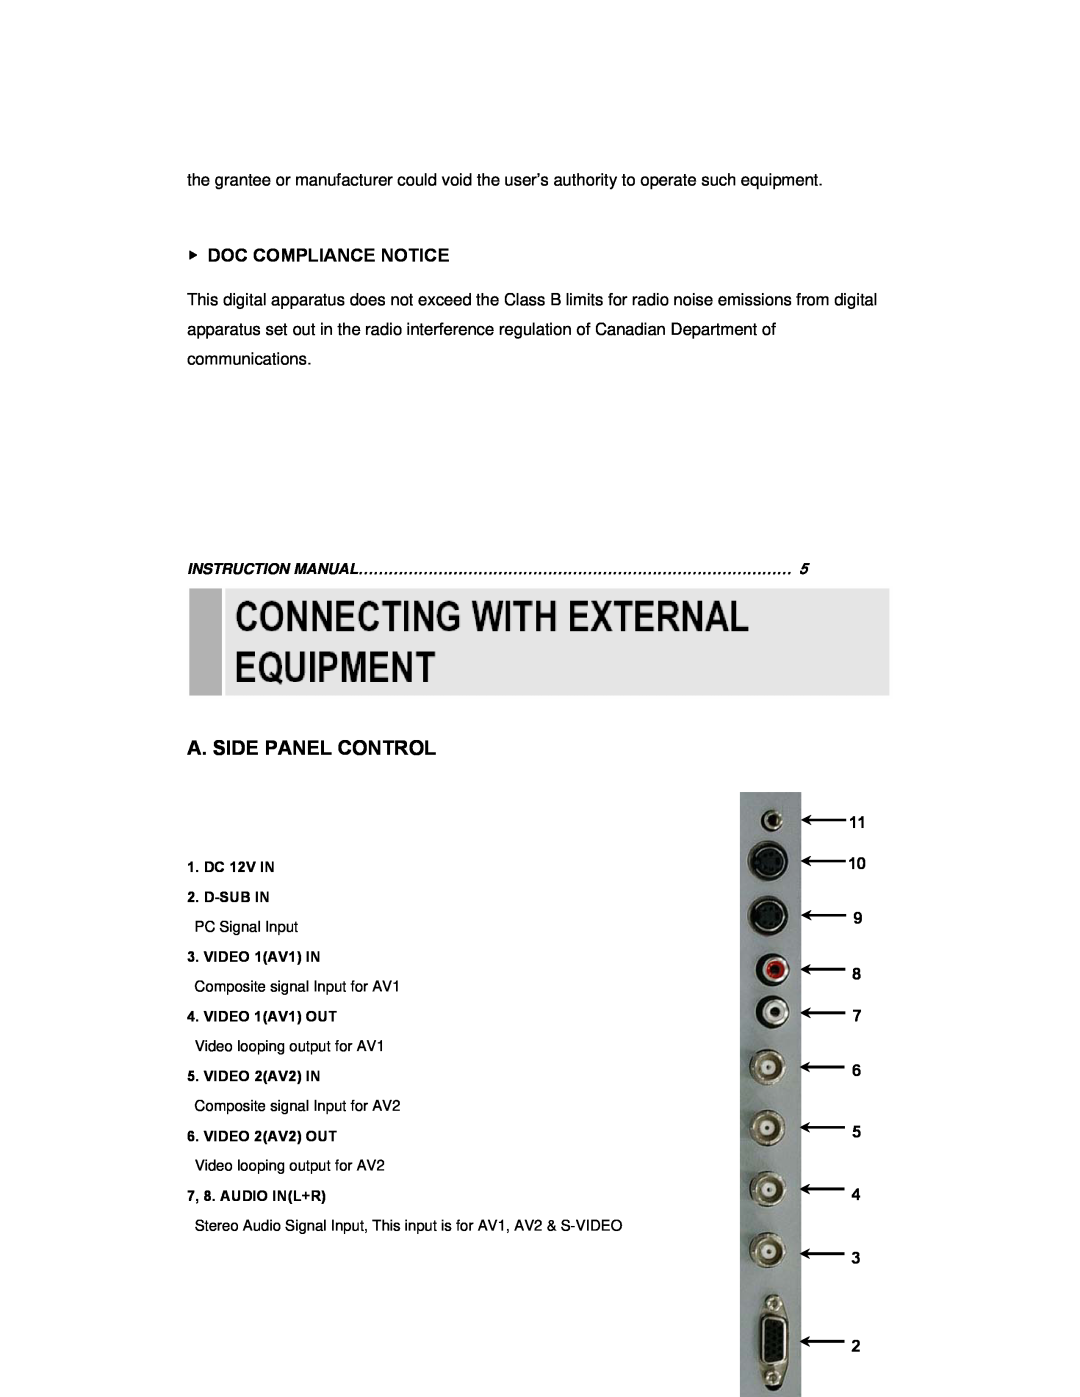 EverFocus EN-7515C instruction manual A. Side Panel Control, Doc Compliance Notice 